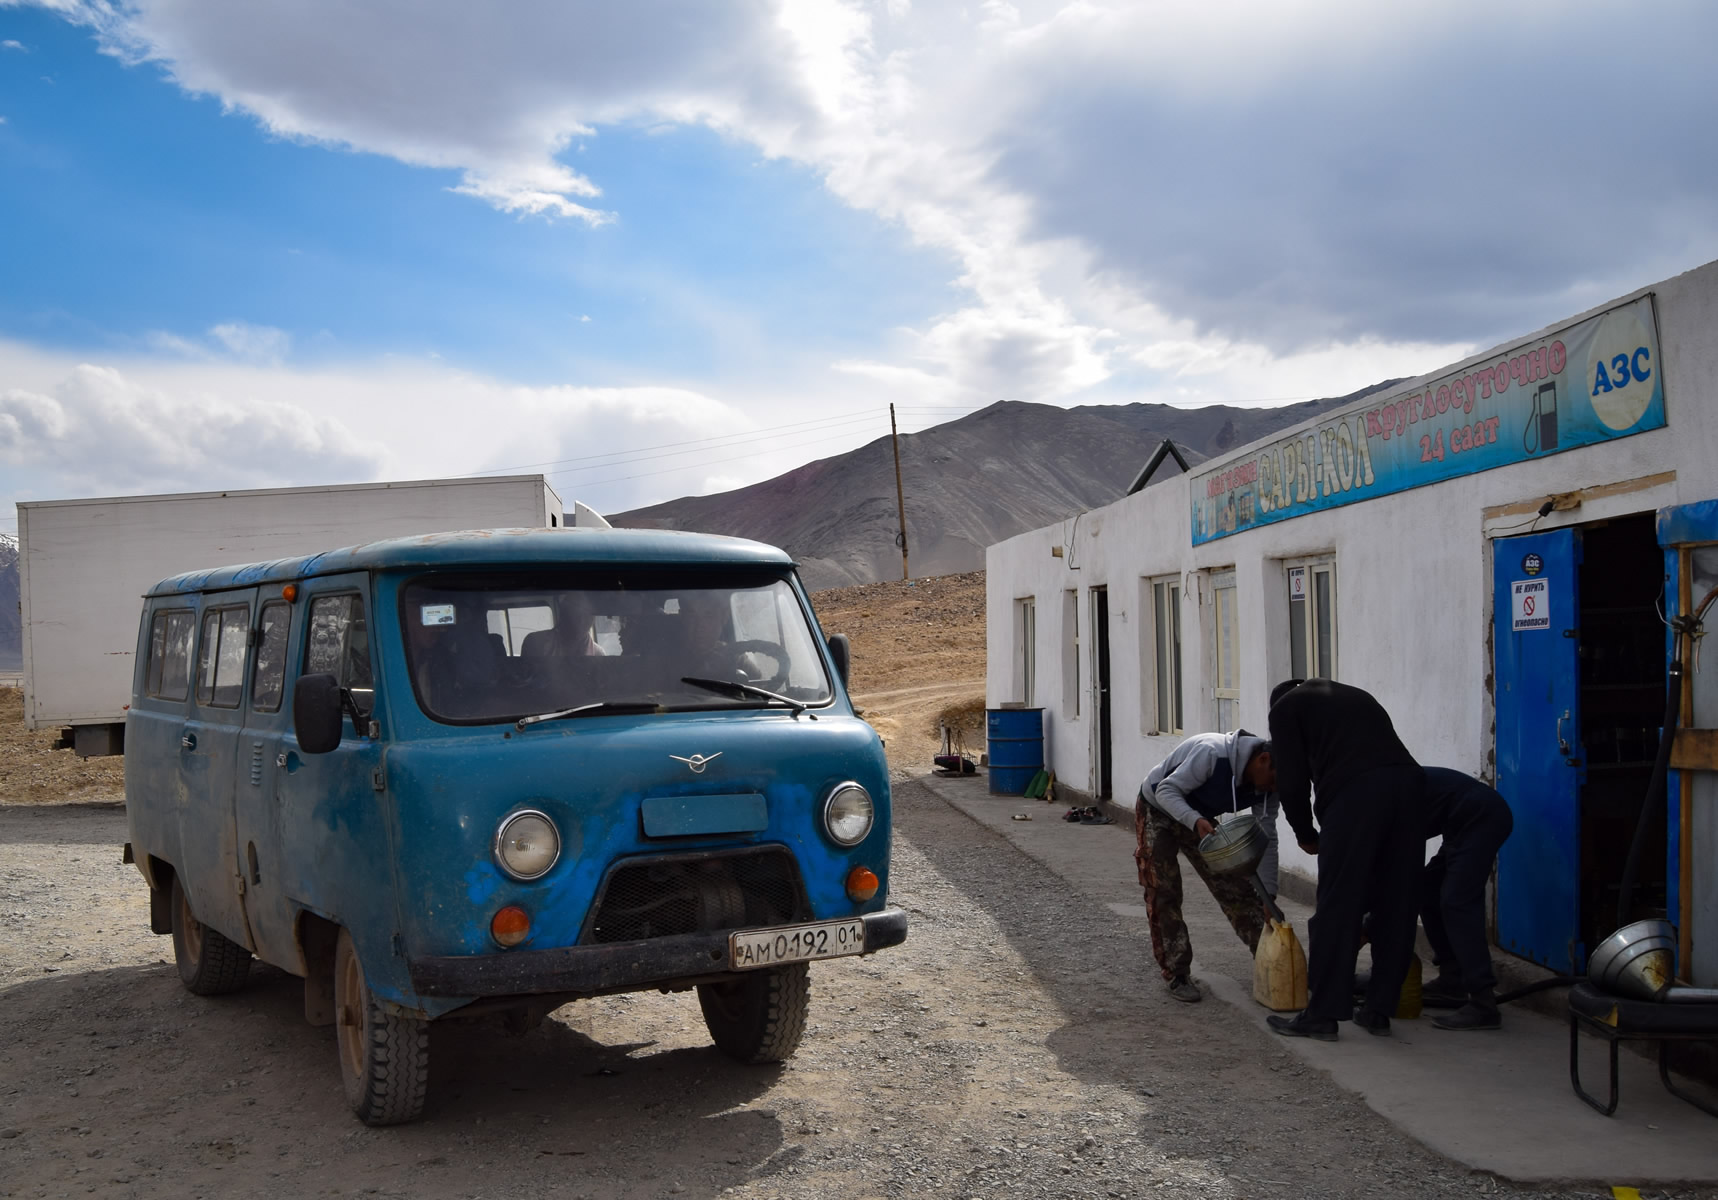 Pamir Highway Expedition 16 days